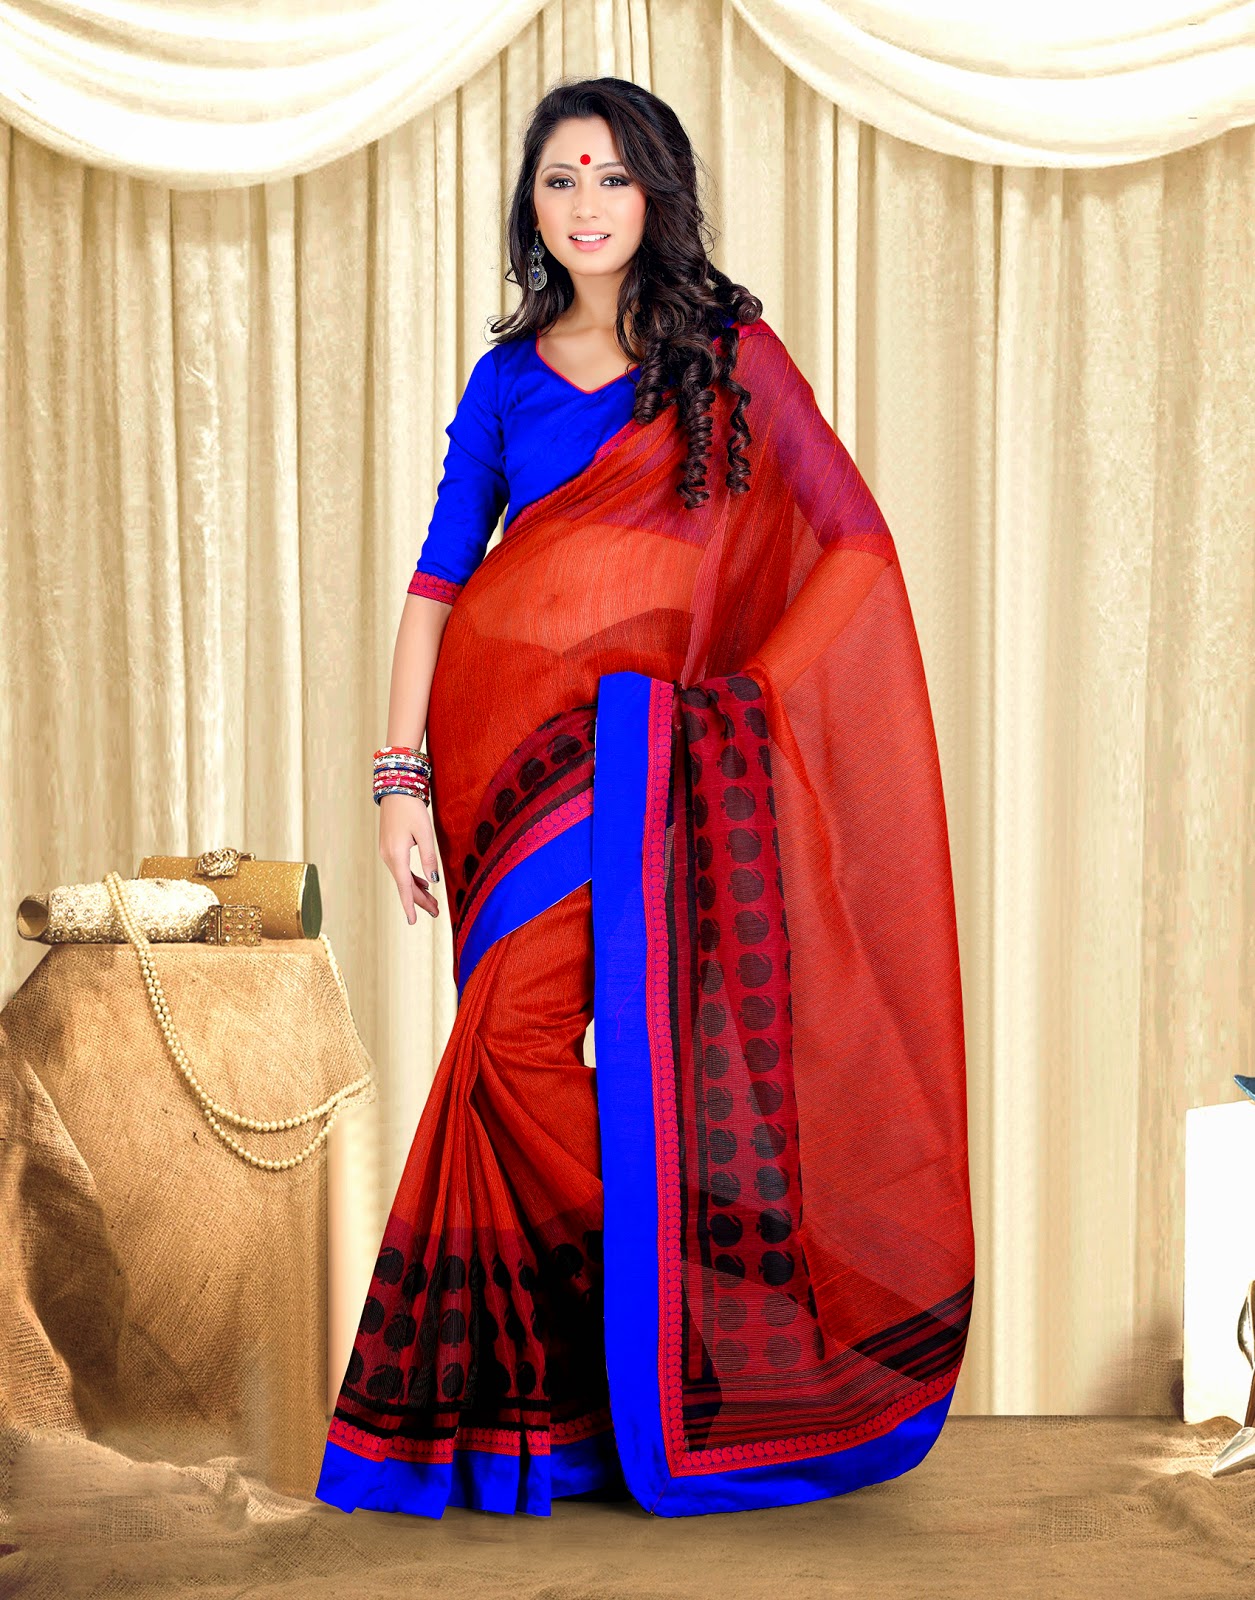 www.amazon.com/Indian-Designer-Bhagalpuri-Cotton-Printed/dp/B00J0V155Y/ref=sr_1_1?s=apparel&ie=UTF8&qid=1401780401&sr=1-1&keywords=PNESR1144ASS